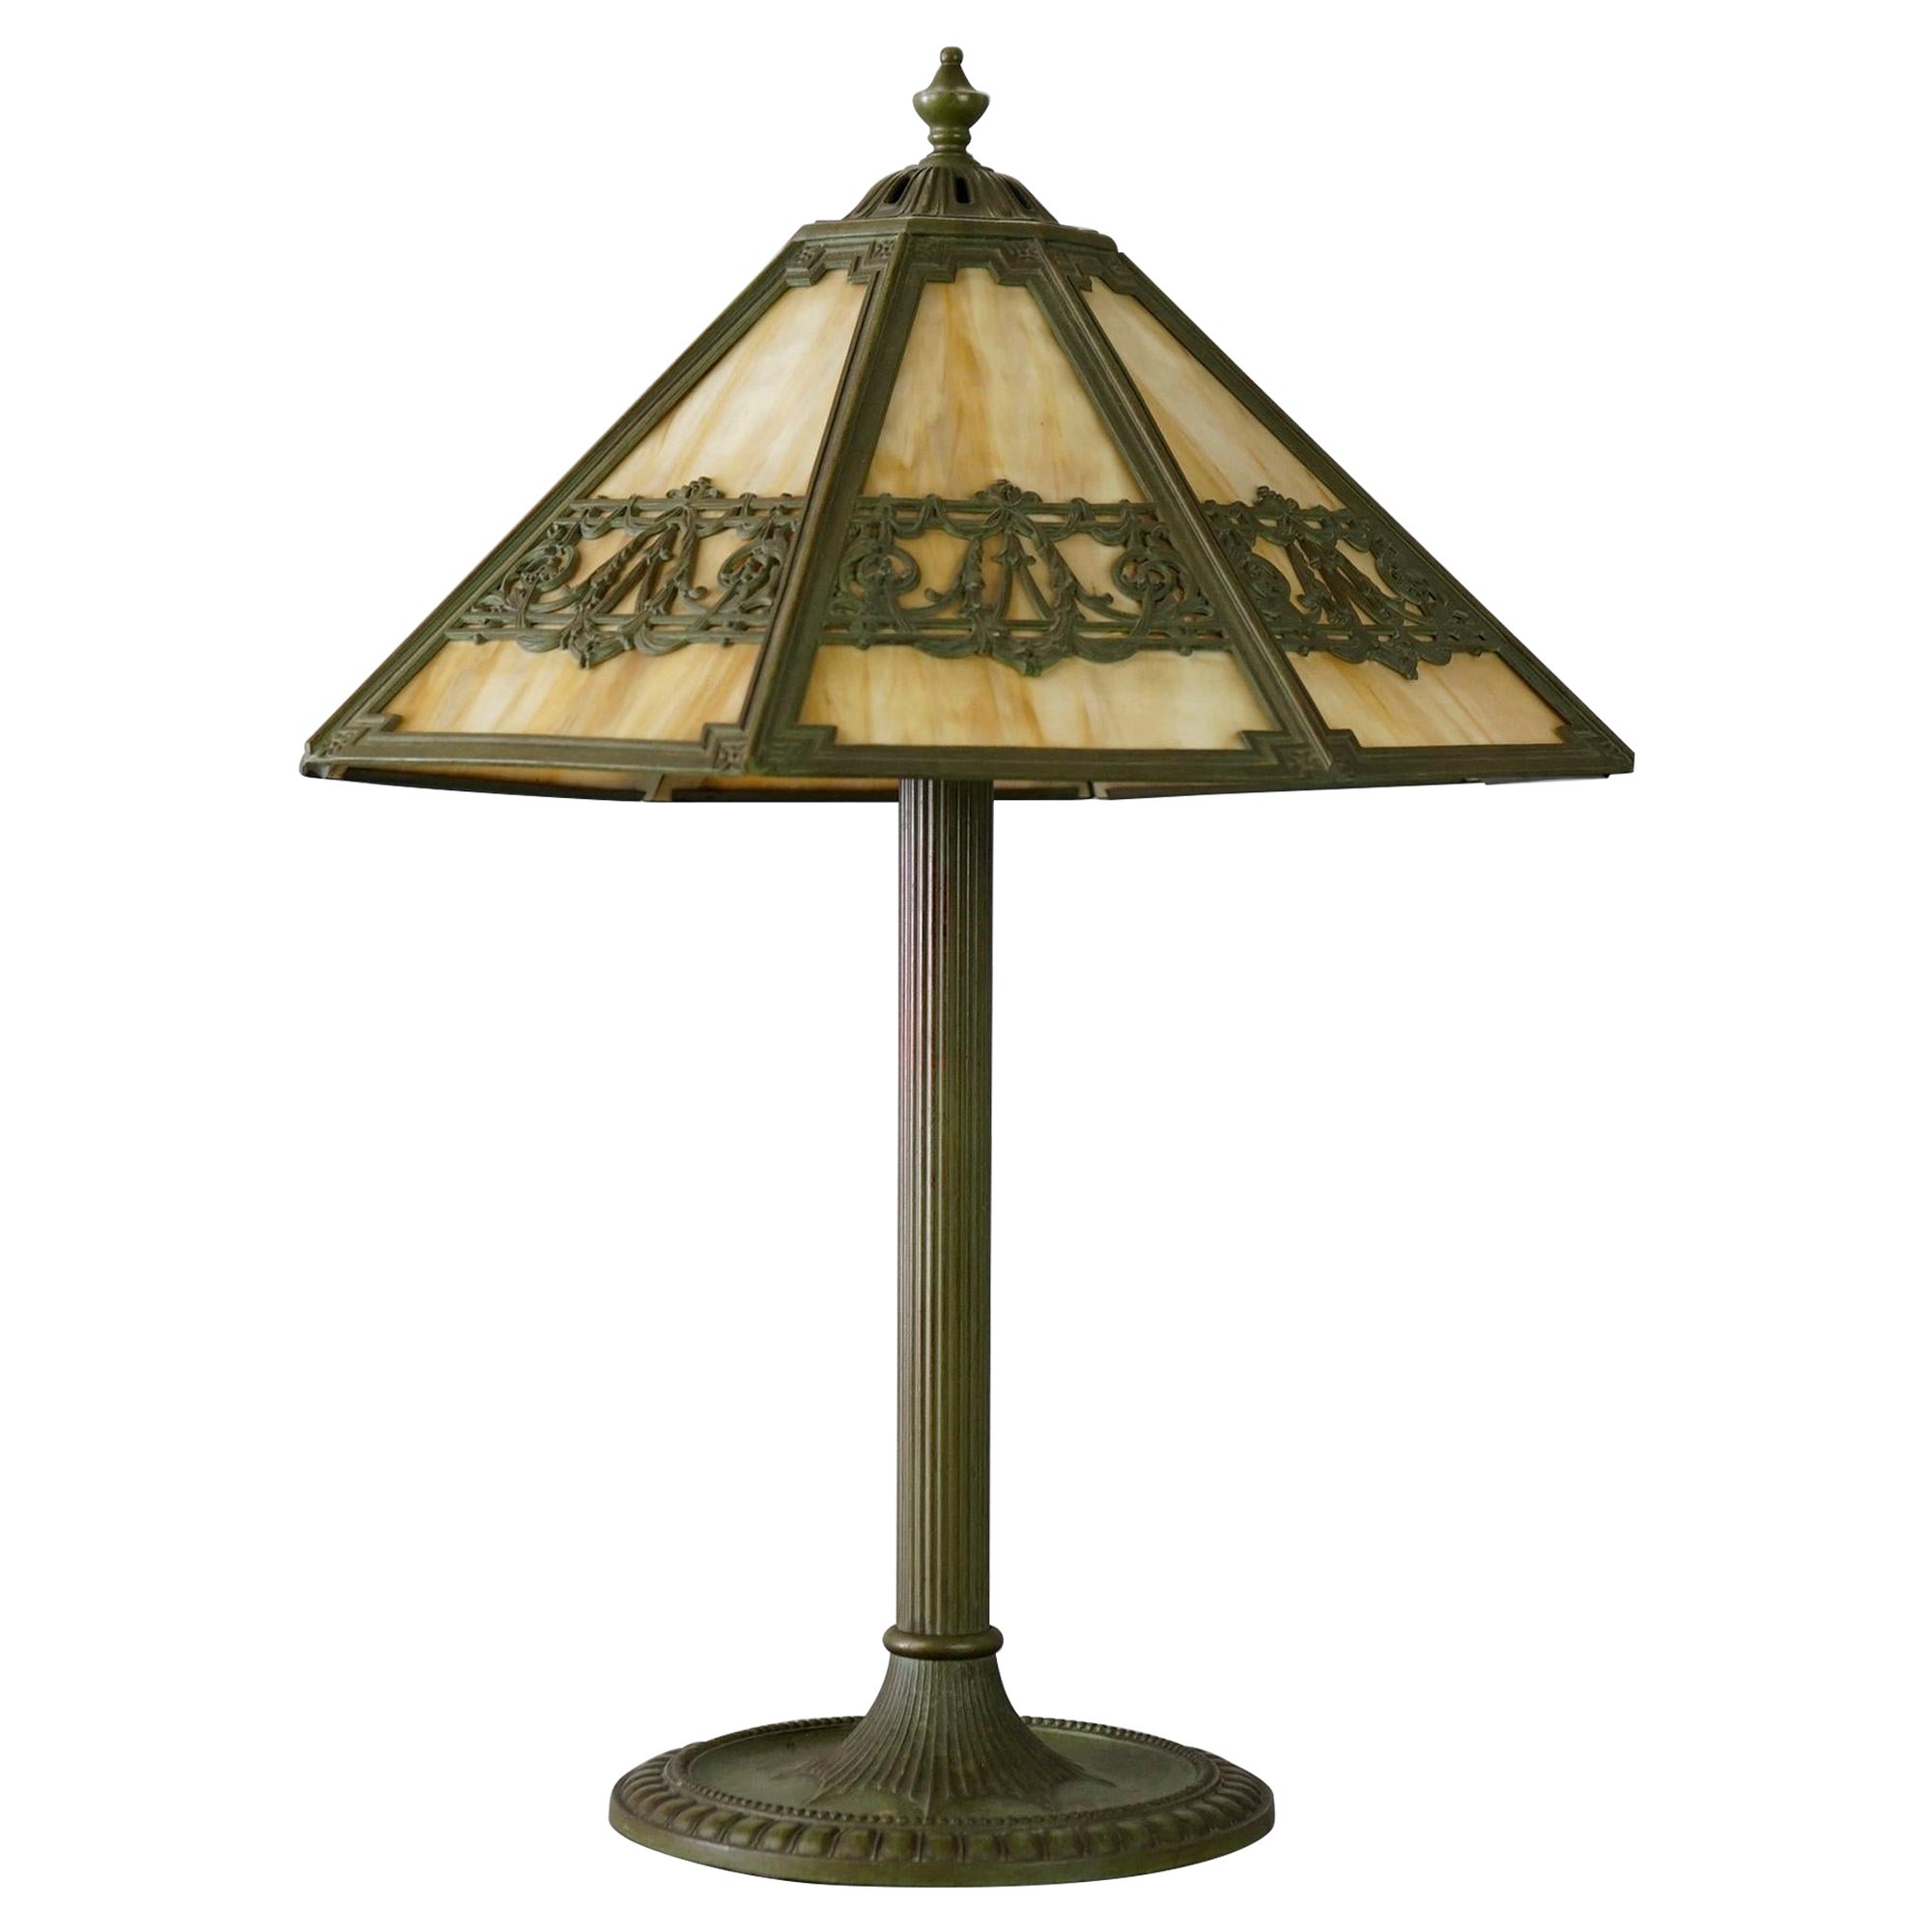 Antique Arts & Crafts Bradley & Hubbard Slag Glass Table Lamp, Signed, c1920